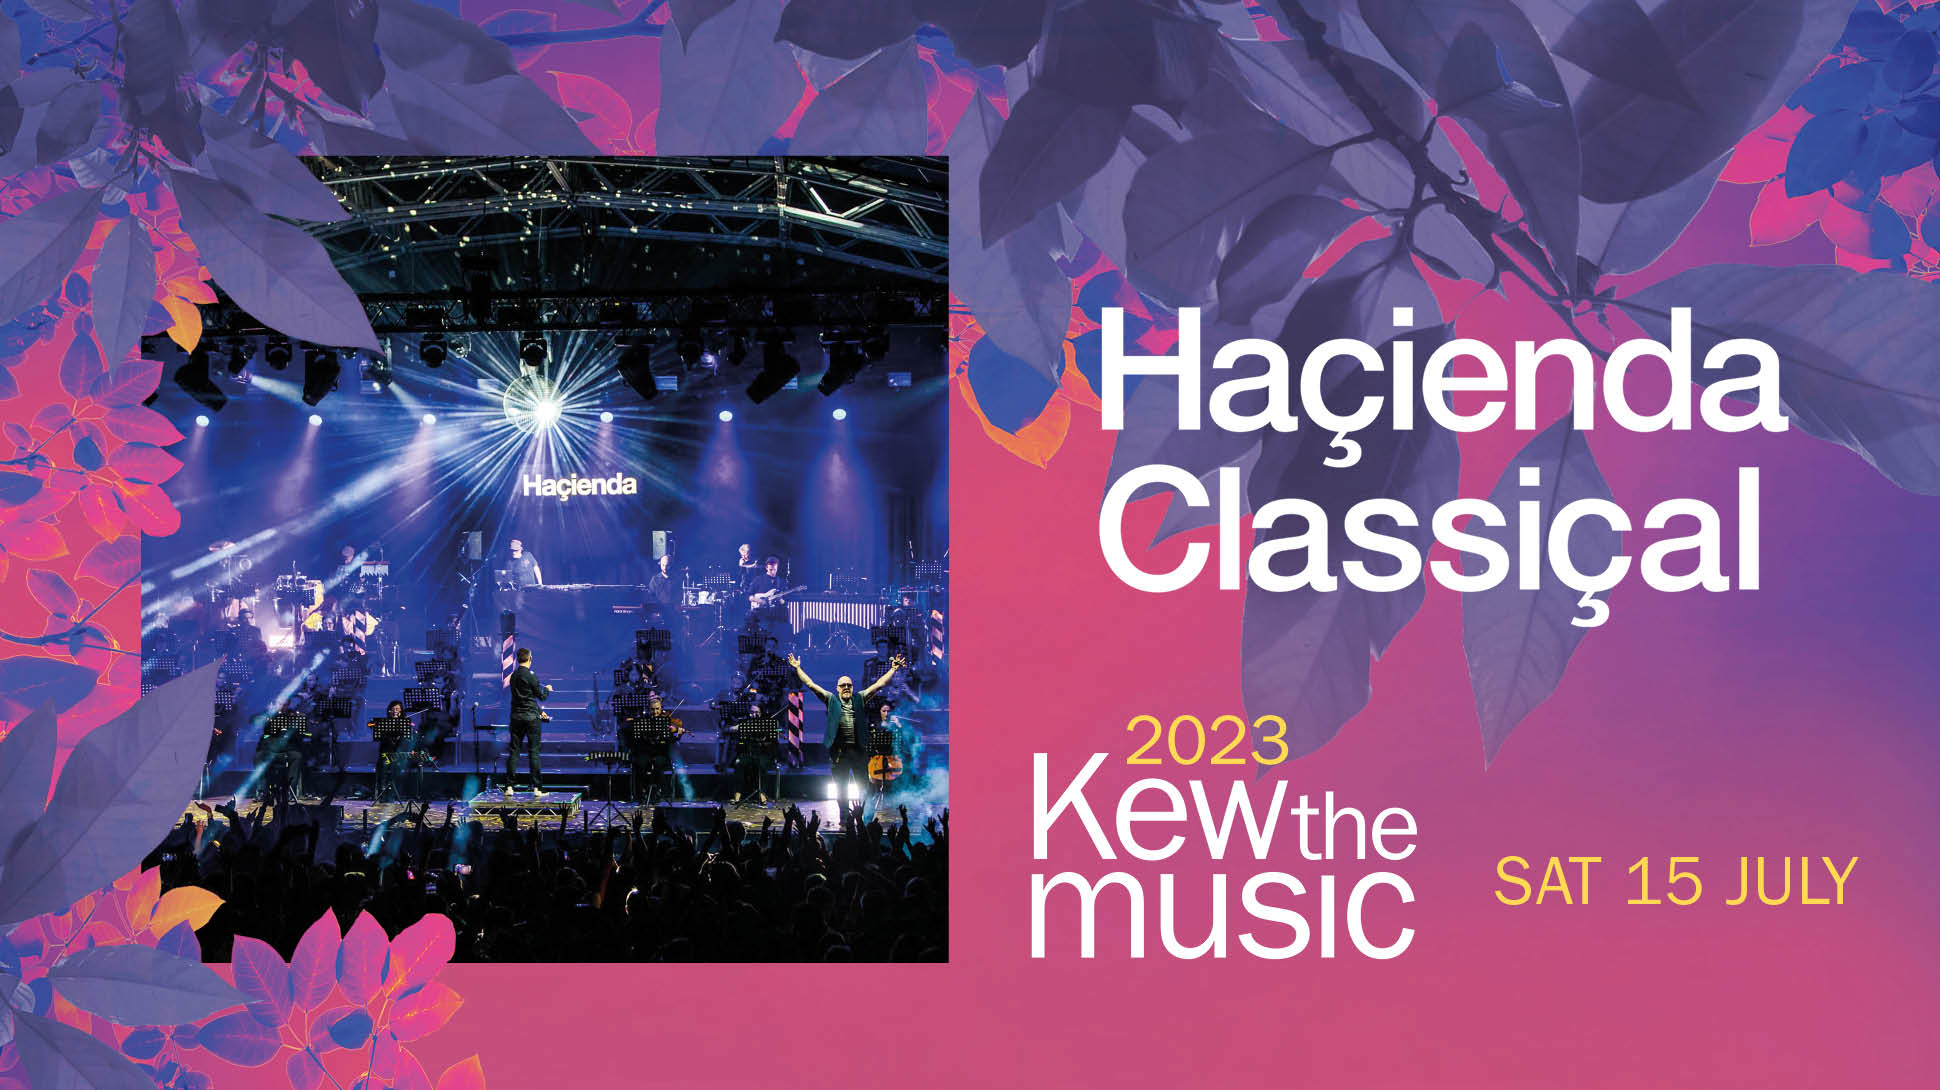 Hacienda Classical at Kew the Music 2023, Saturday 15 July